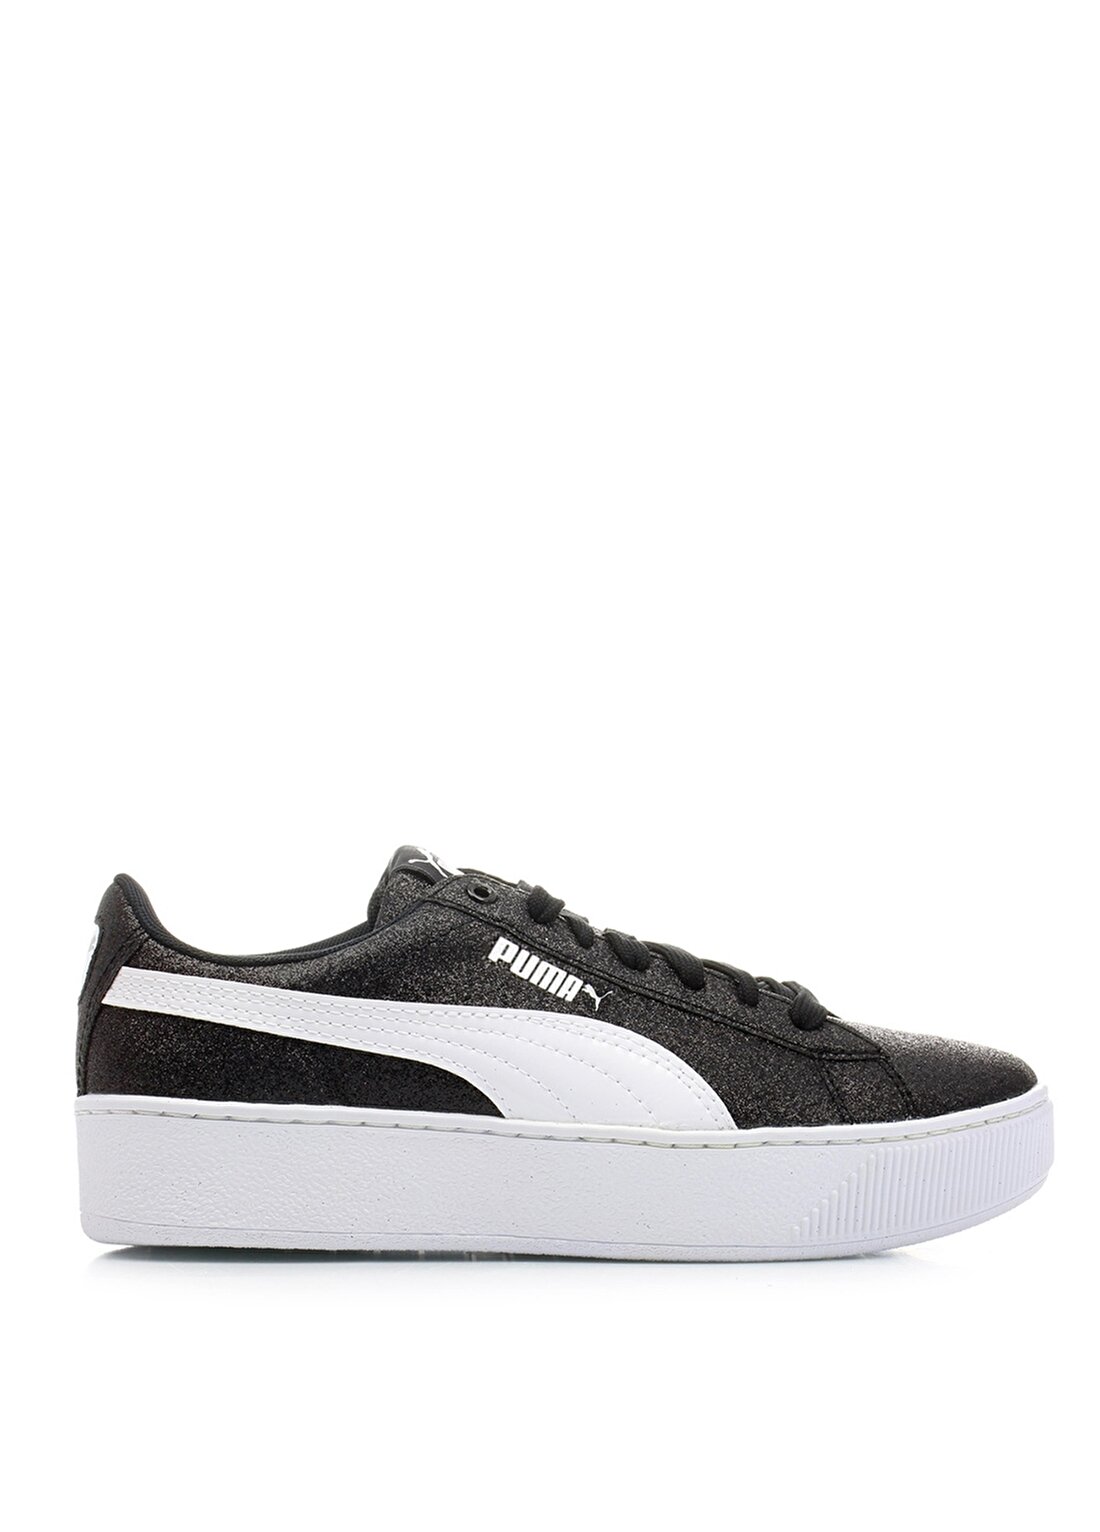 Puma 36685602 Vikky Platform Glitz Siyah Beyaz Gümüş Kız Çocuk Ayakkabısı